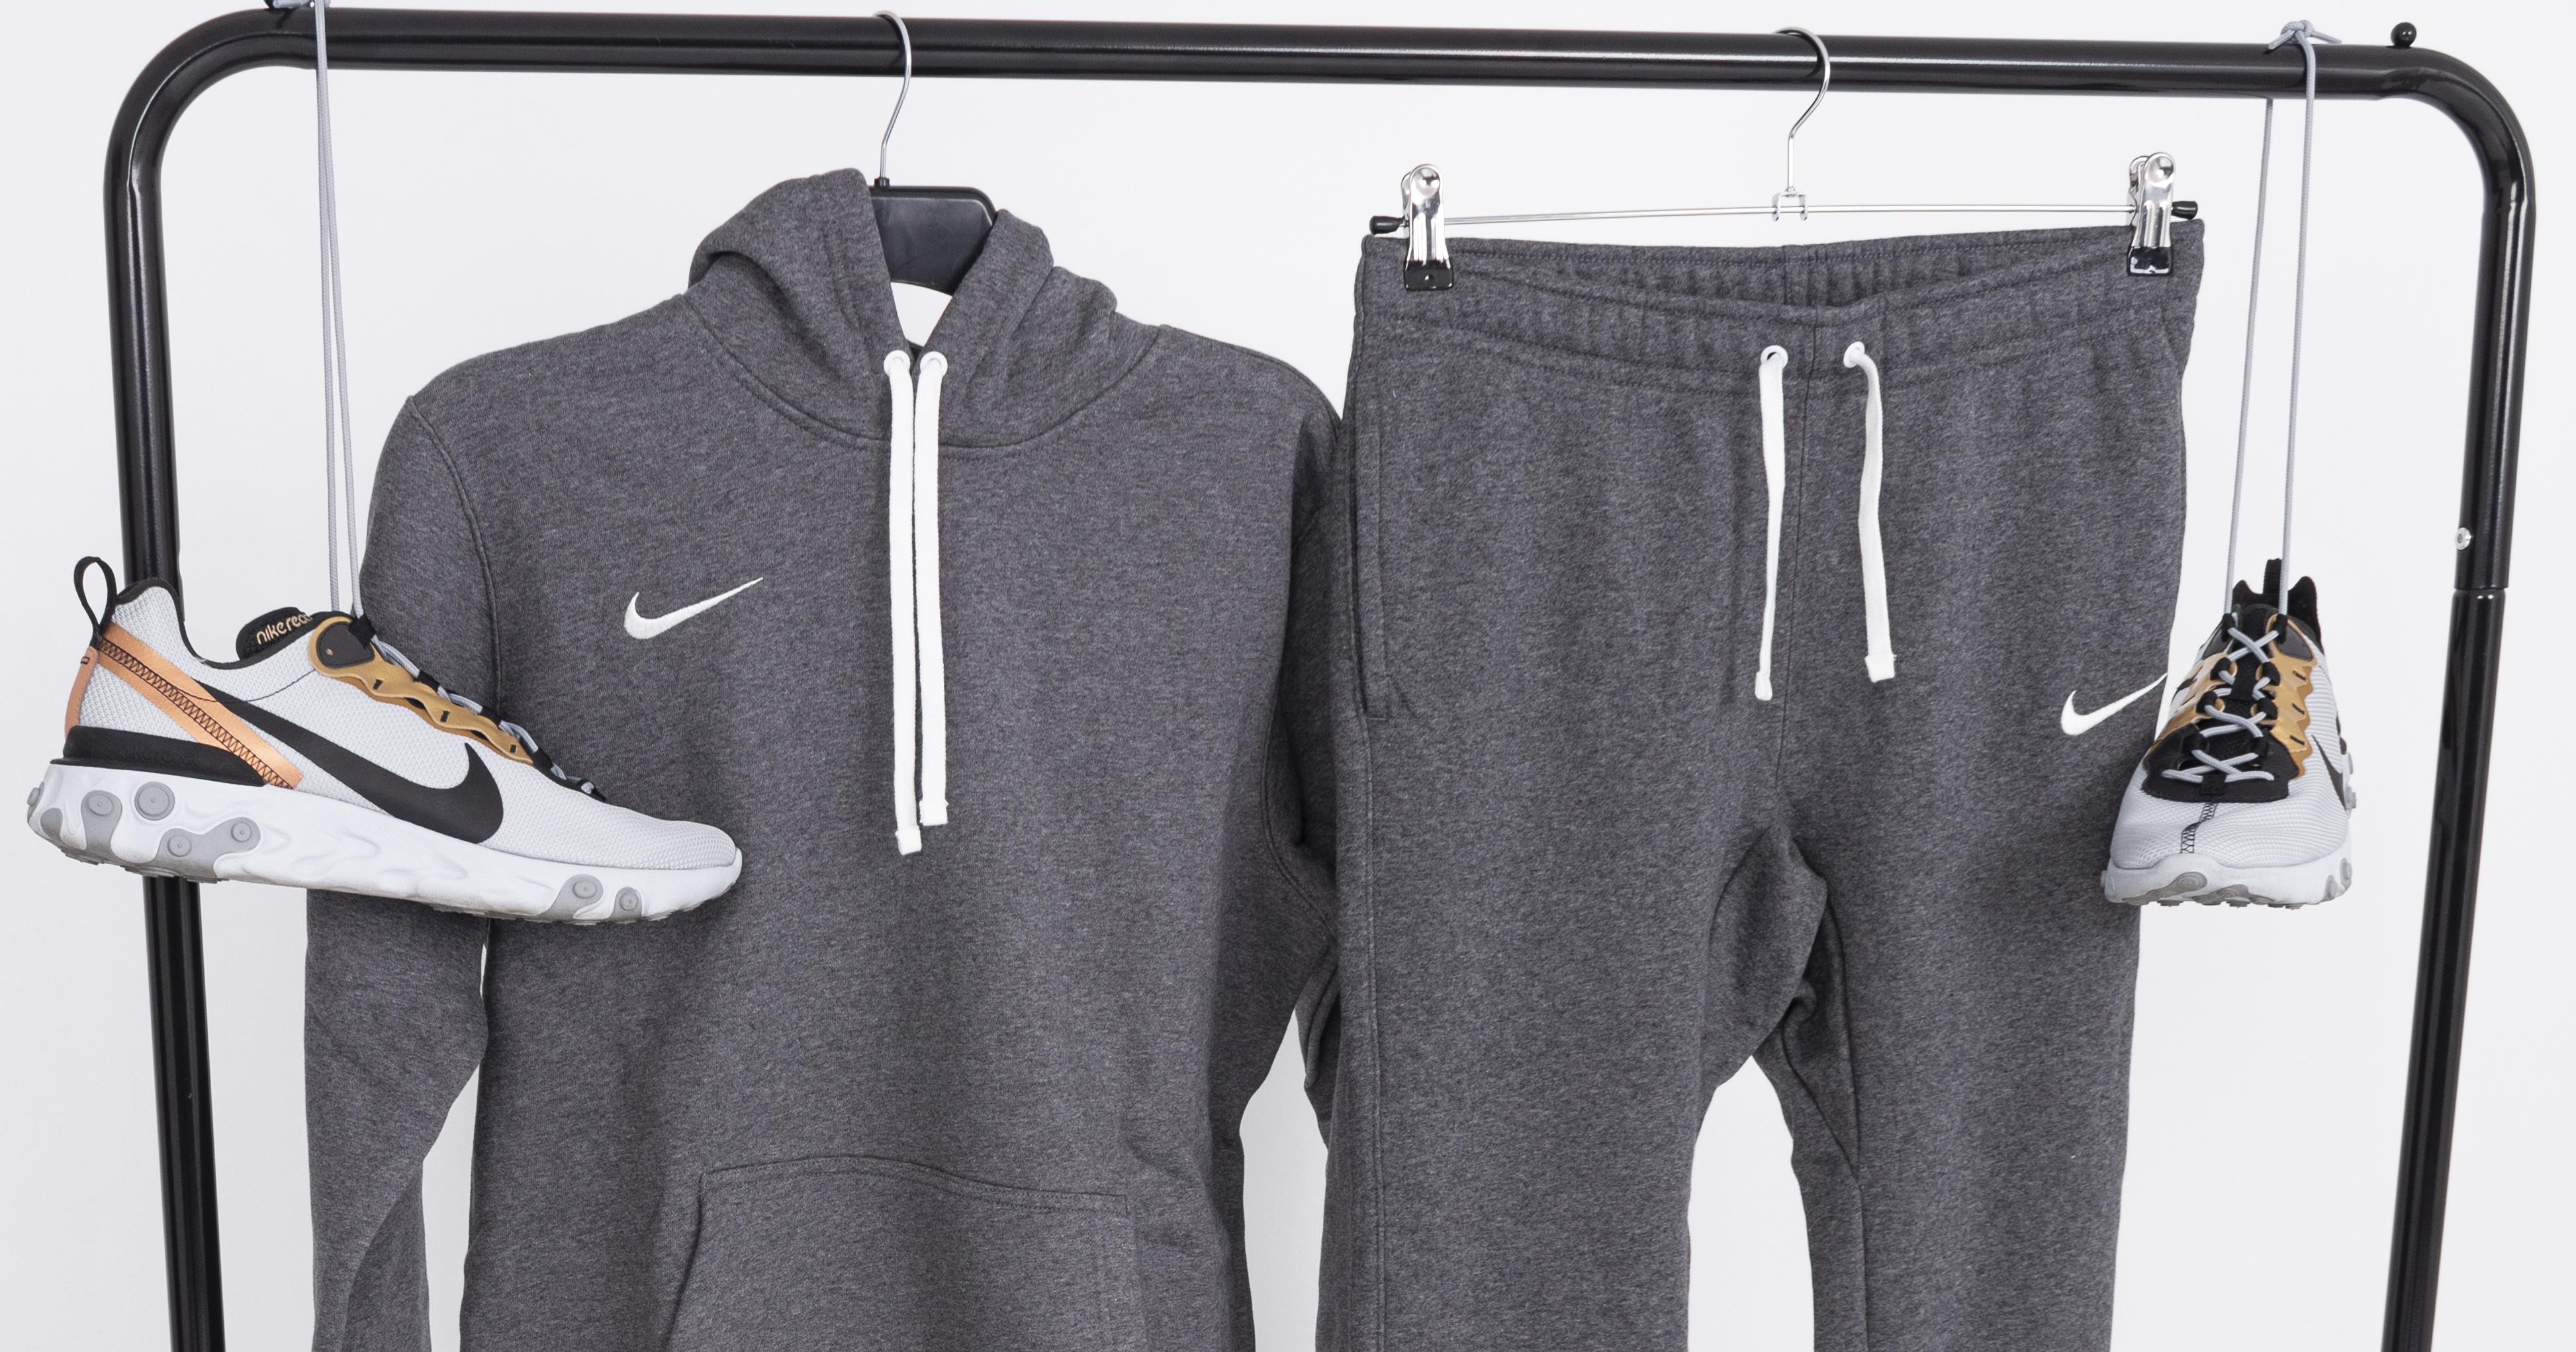 You x Nike Loungewear: The Perfect Partnership